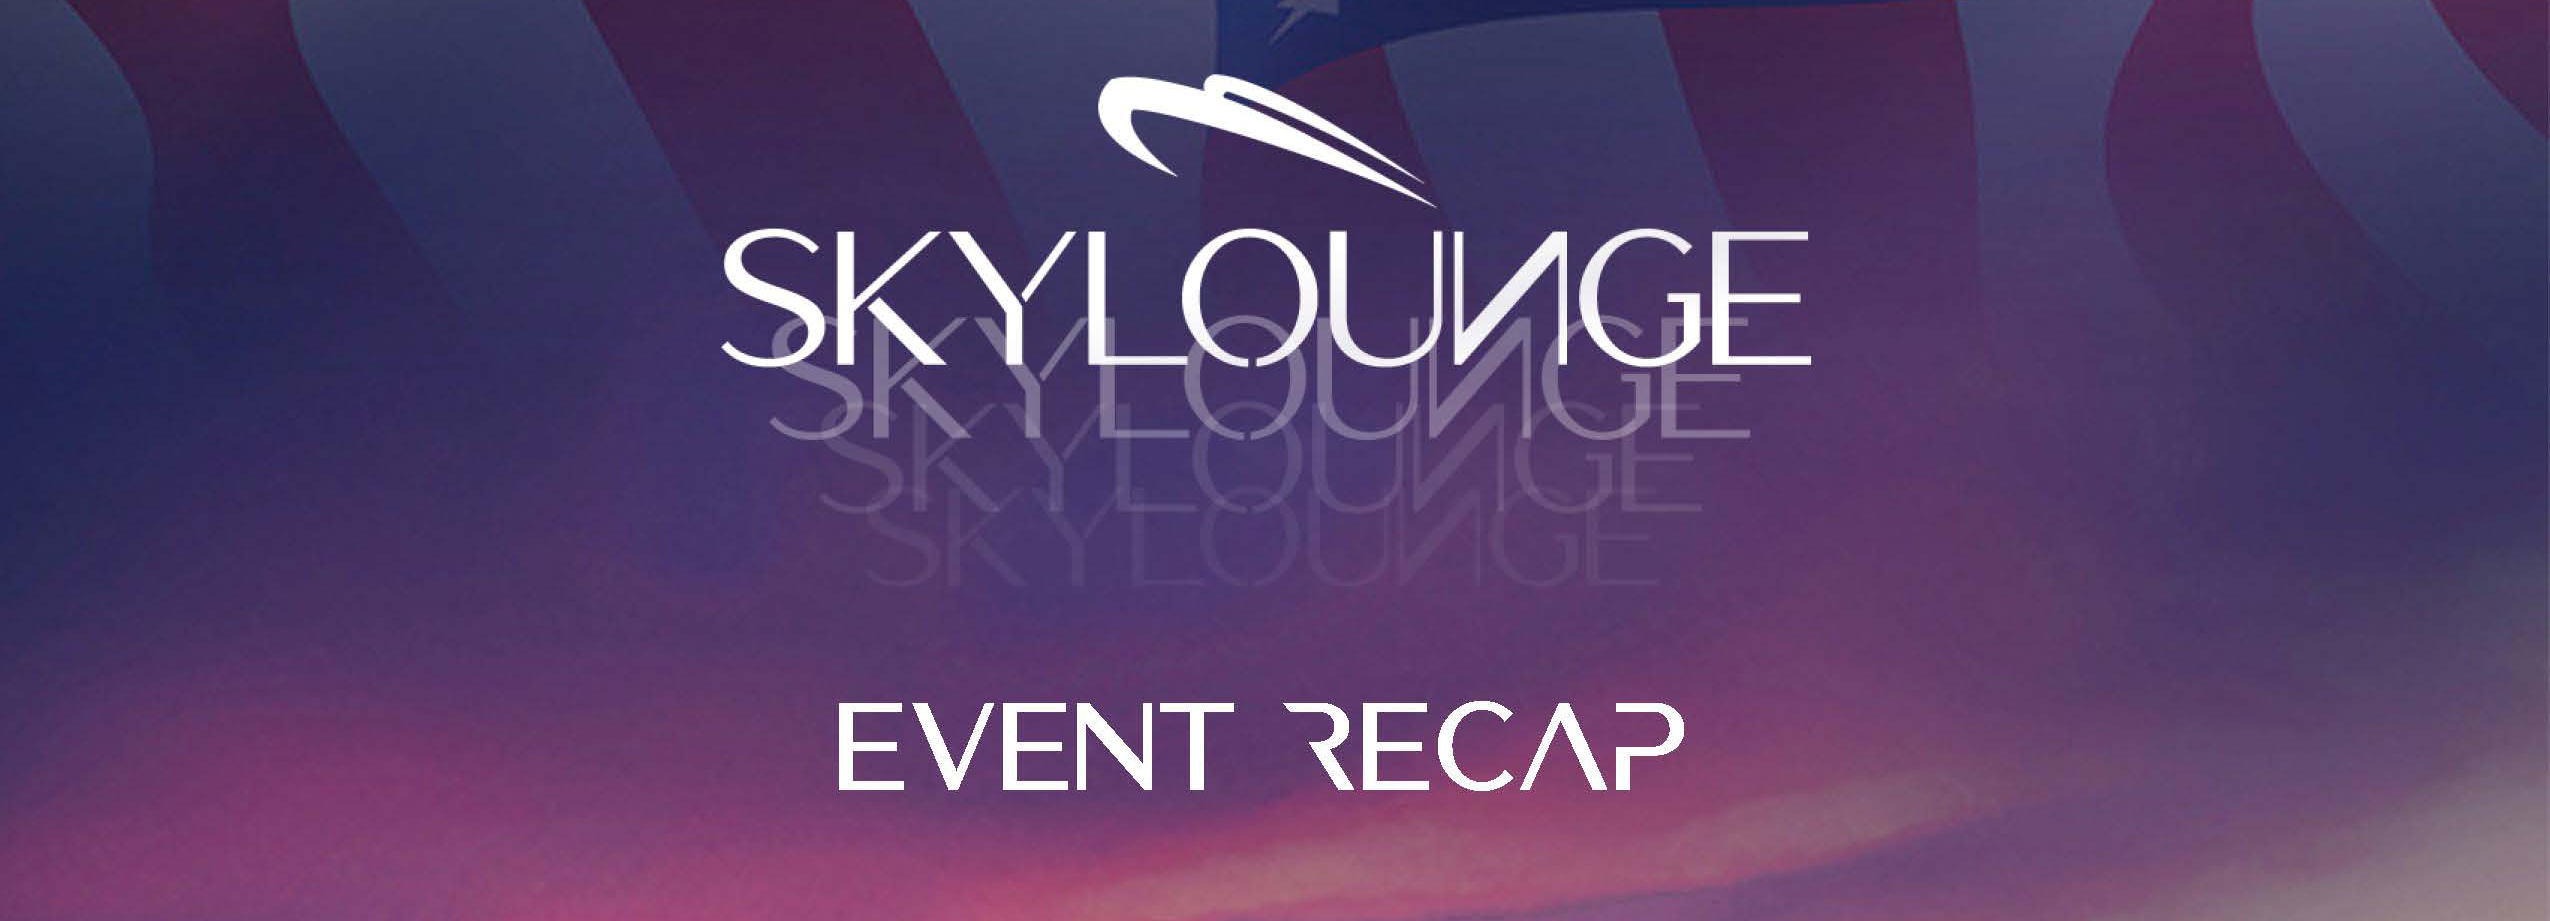 Sky Lounge event recap header